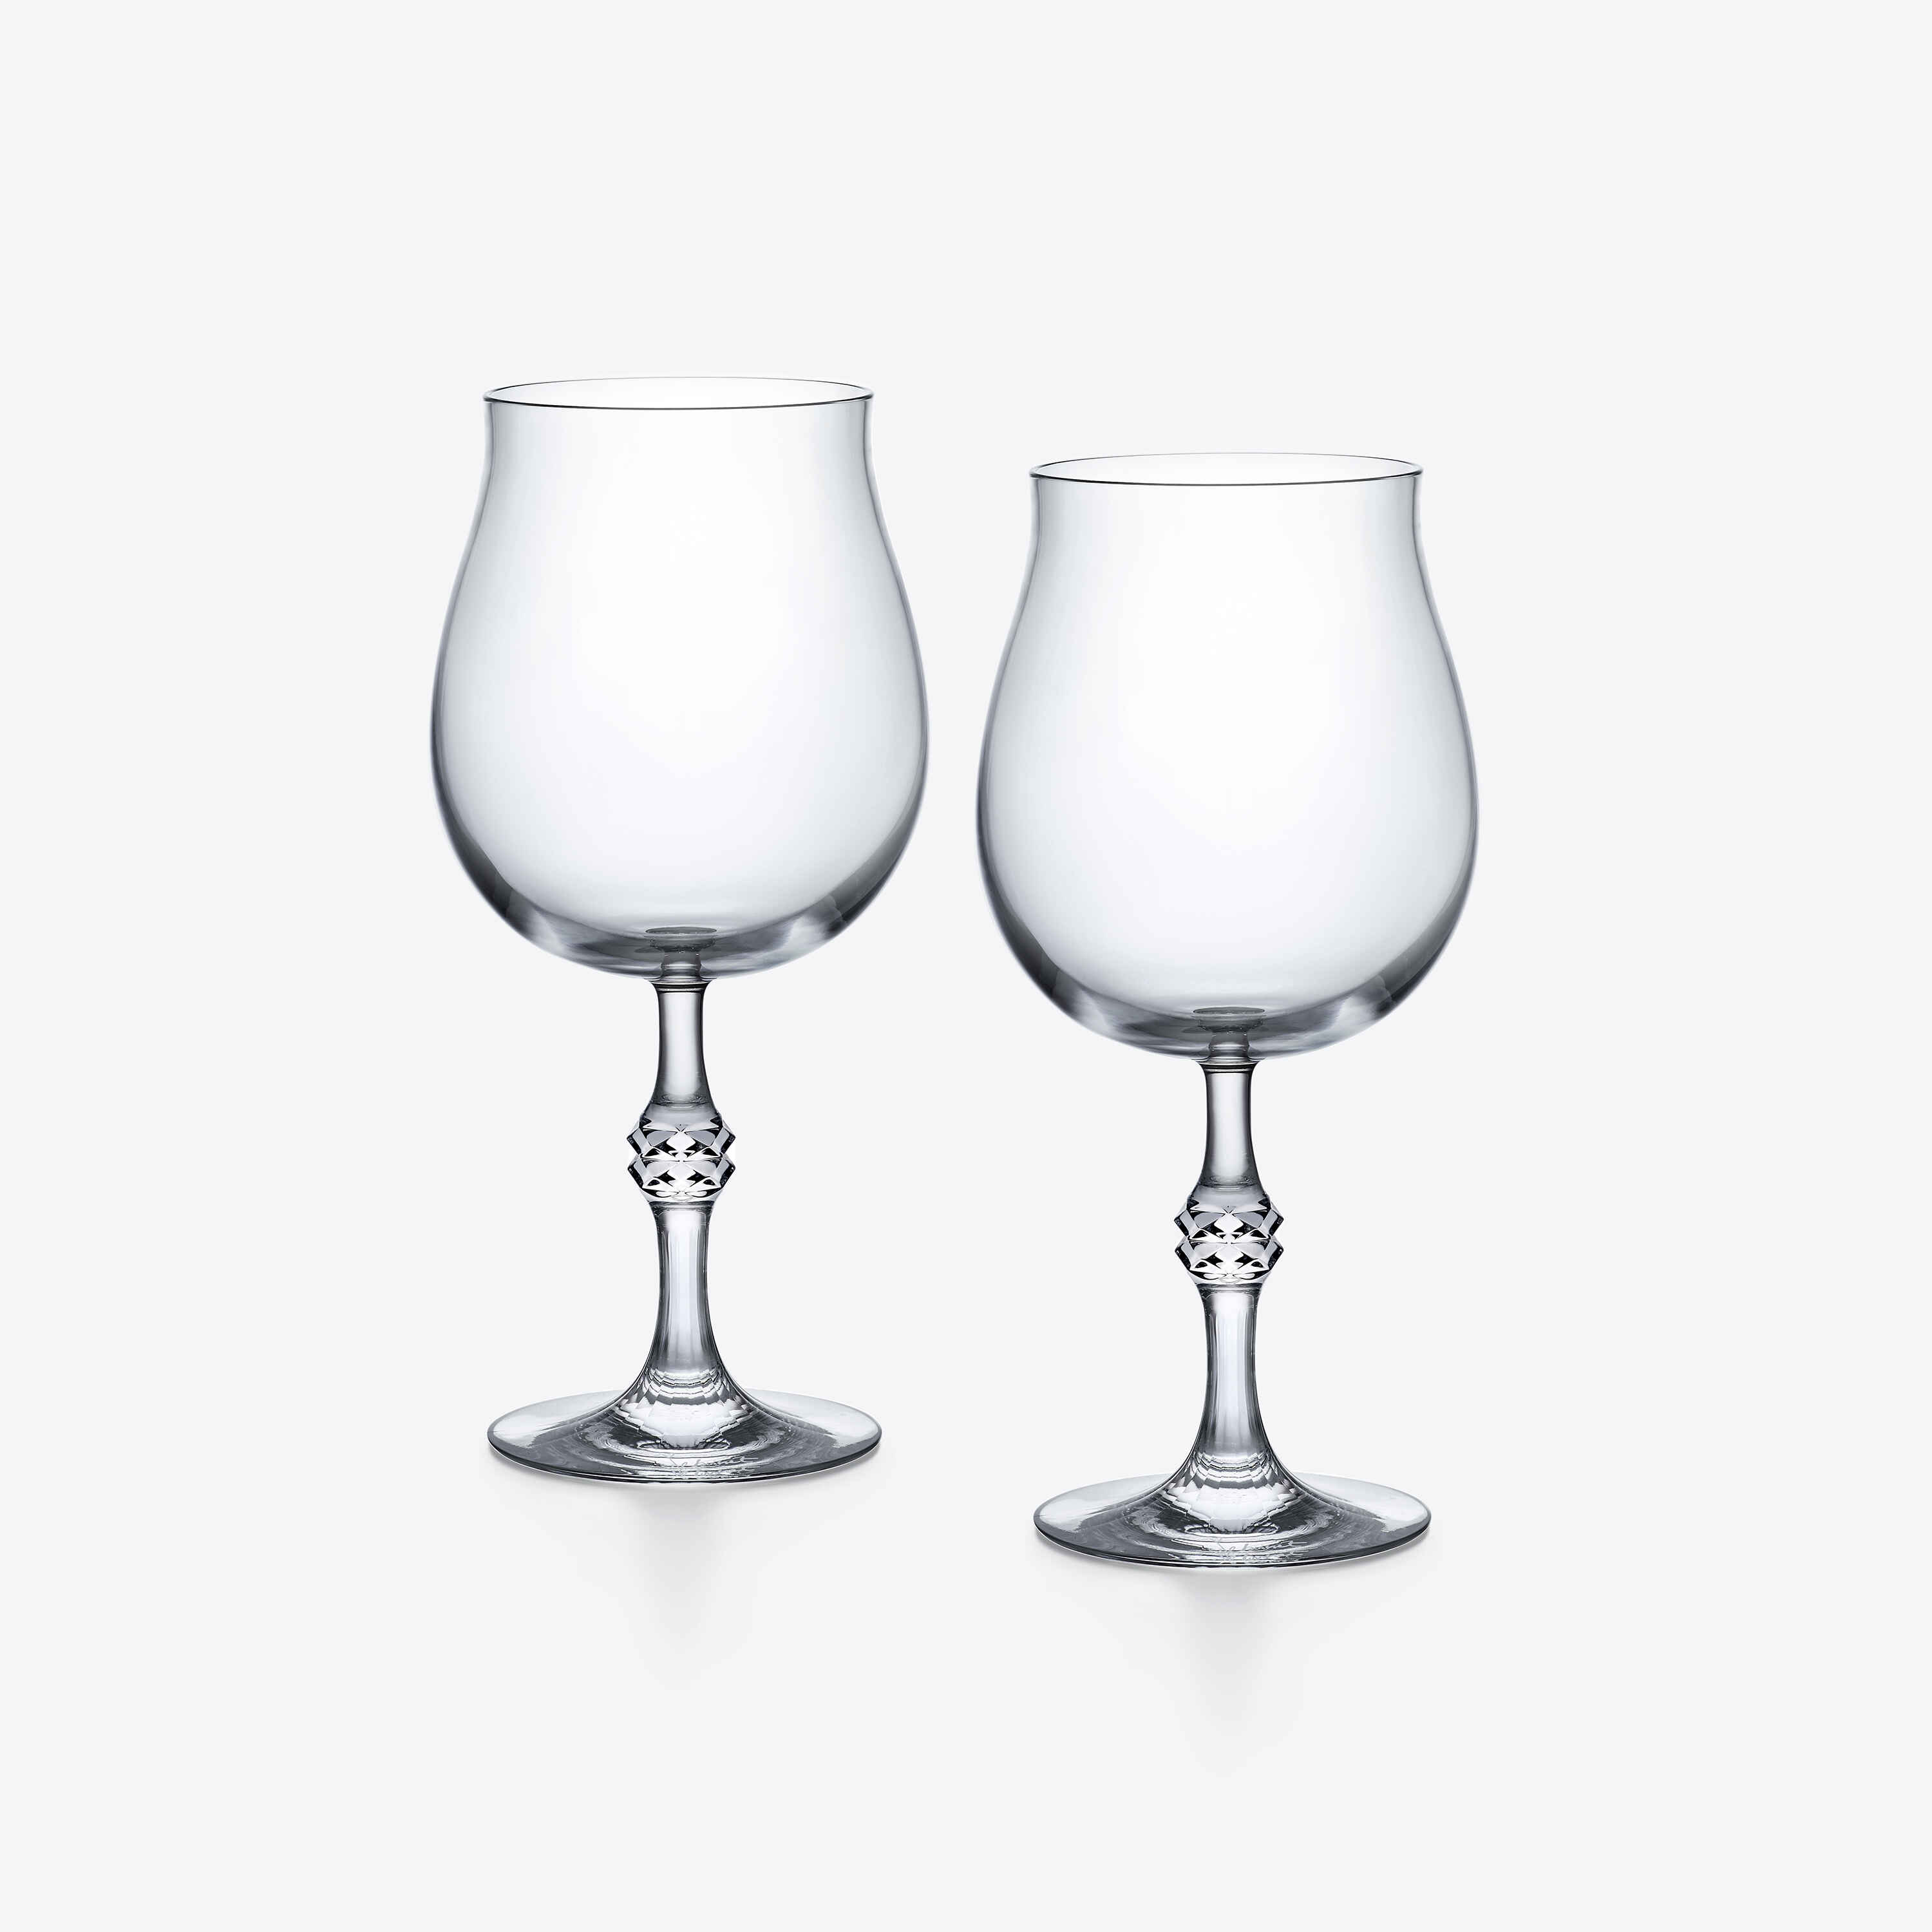 Reserve Nouveau Crystal Wine Glasses - Sunset (Set of 4)